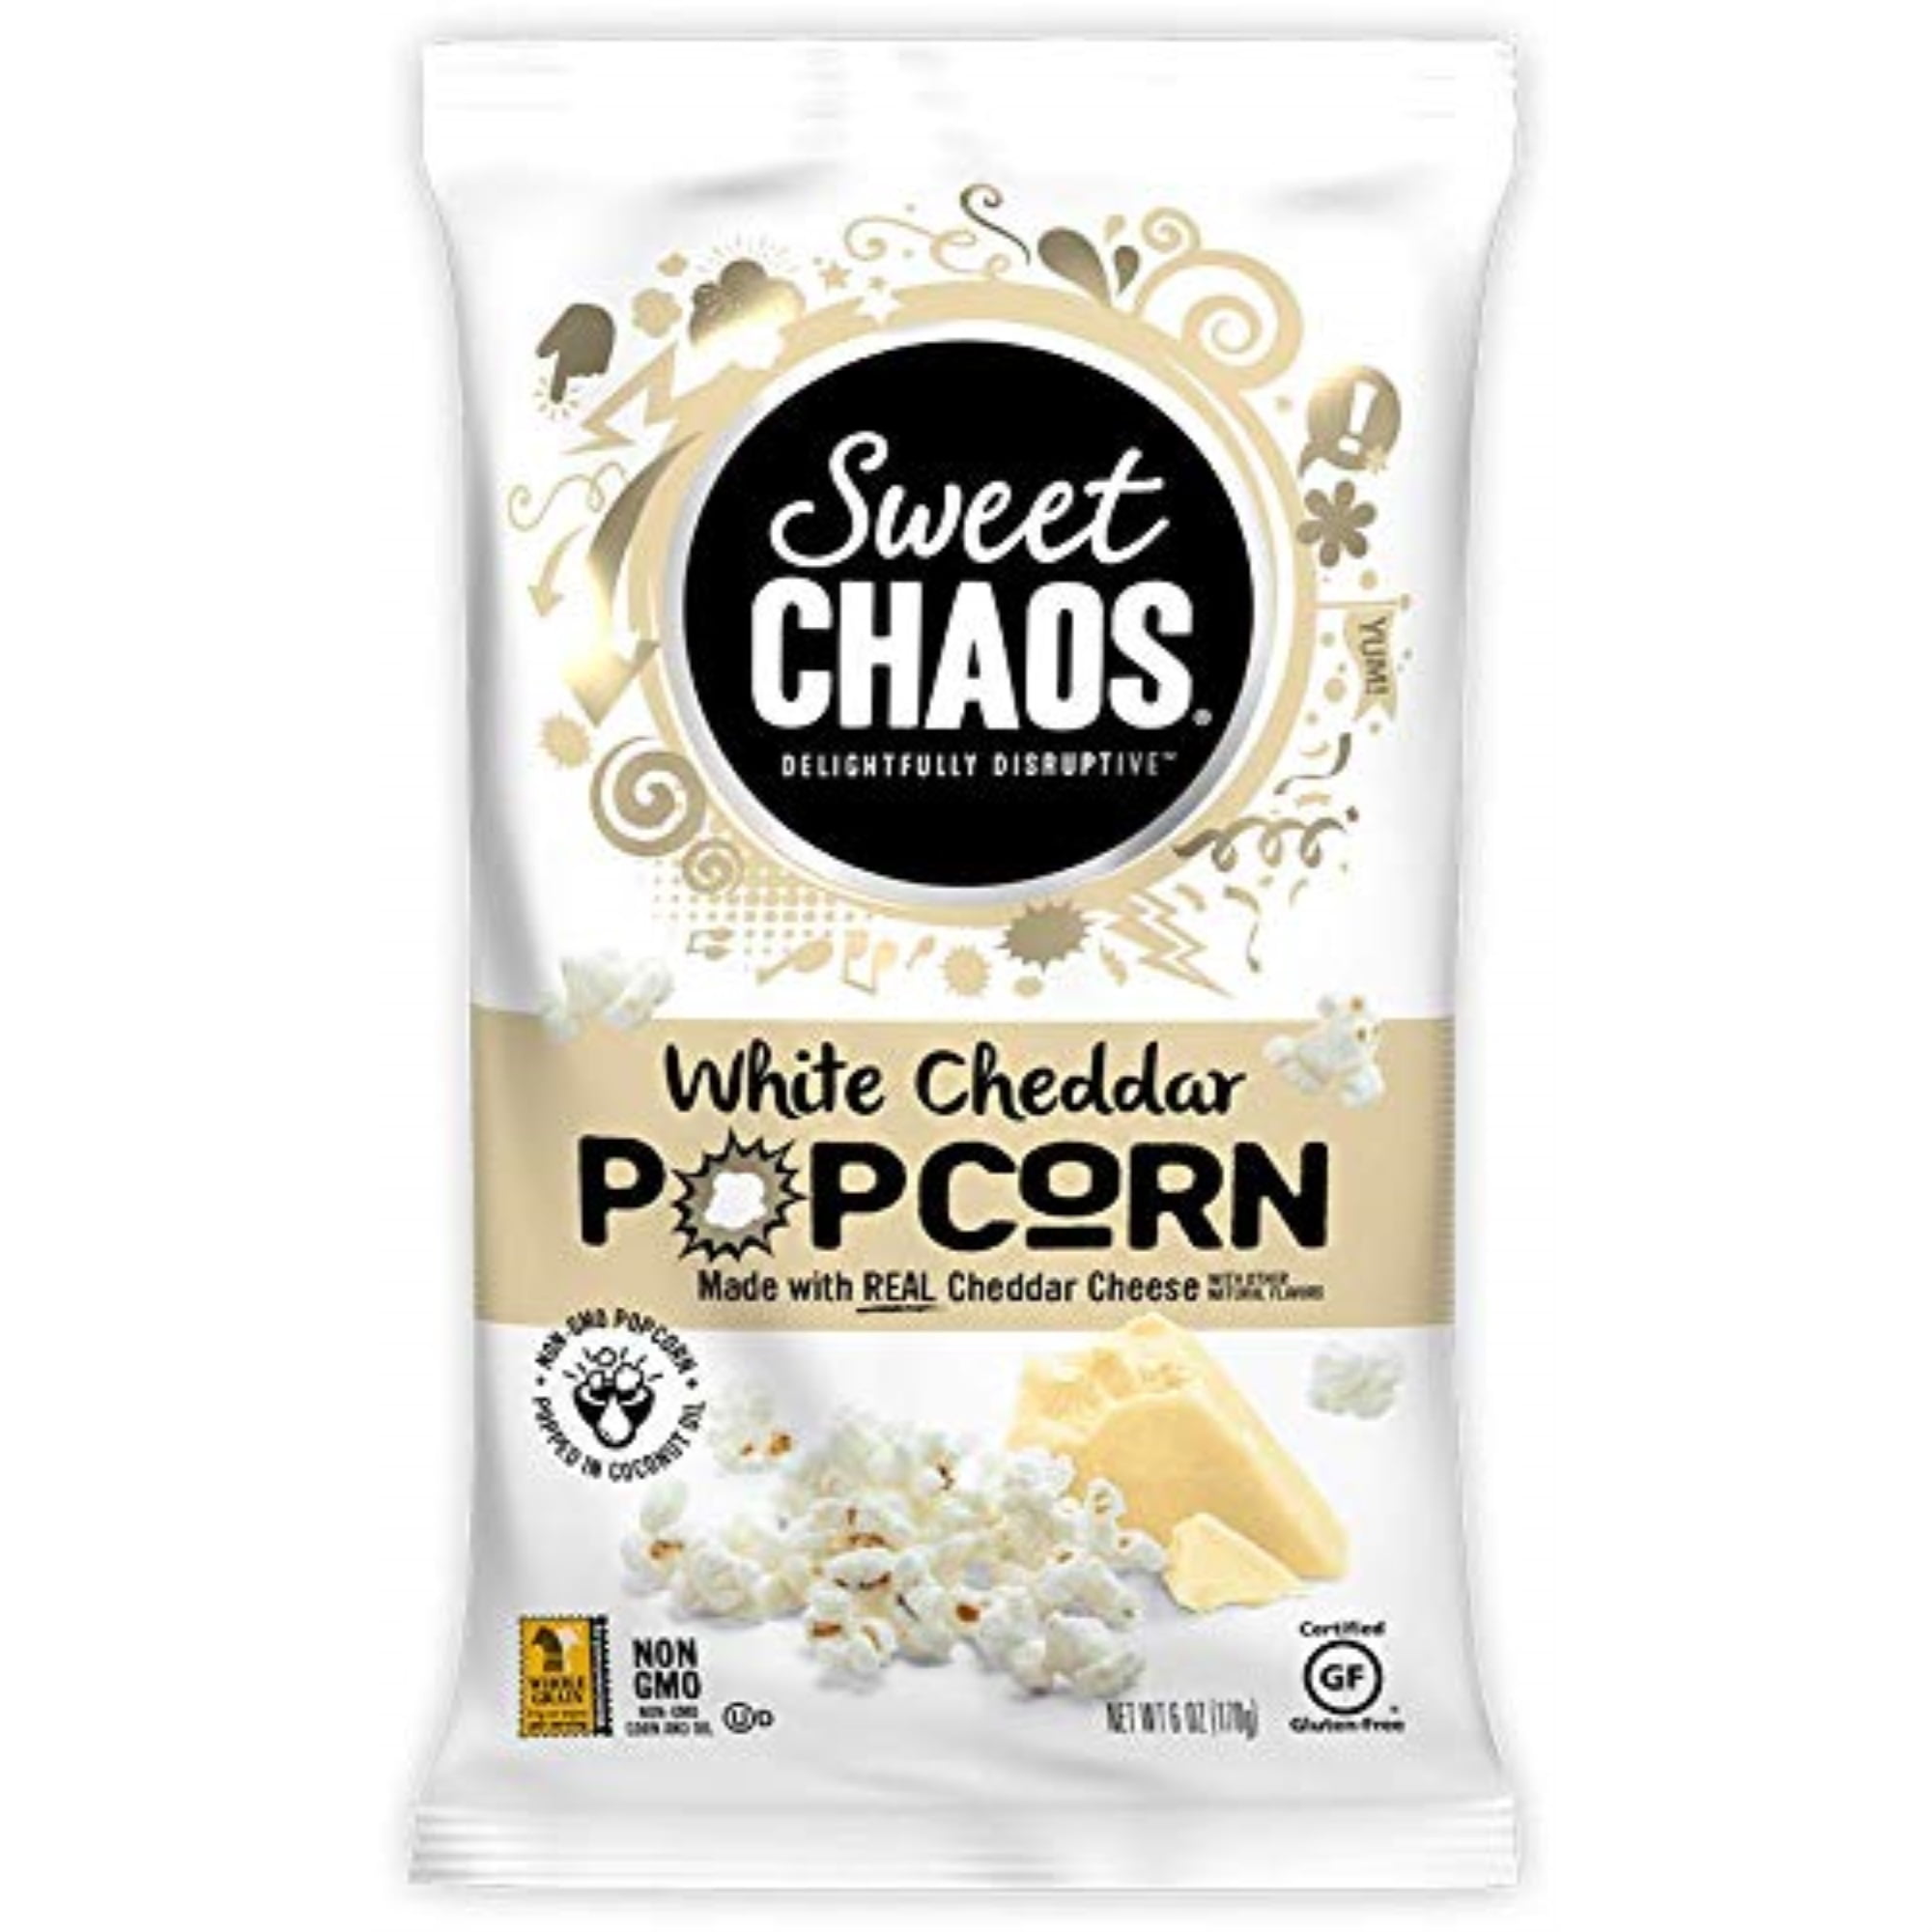 Price/Case)Popcorn Indiana Crispy And Savory Sea Salt, 2.1 Ounce, 6 per  case 